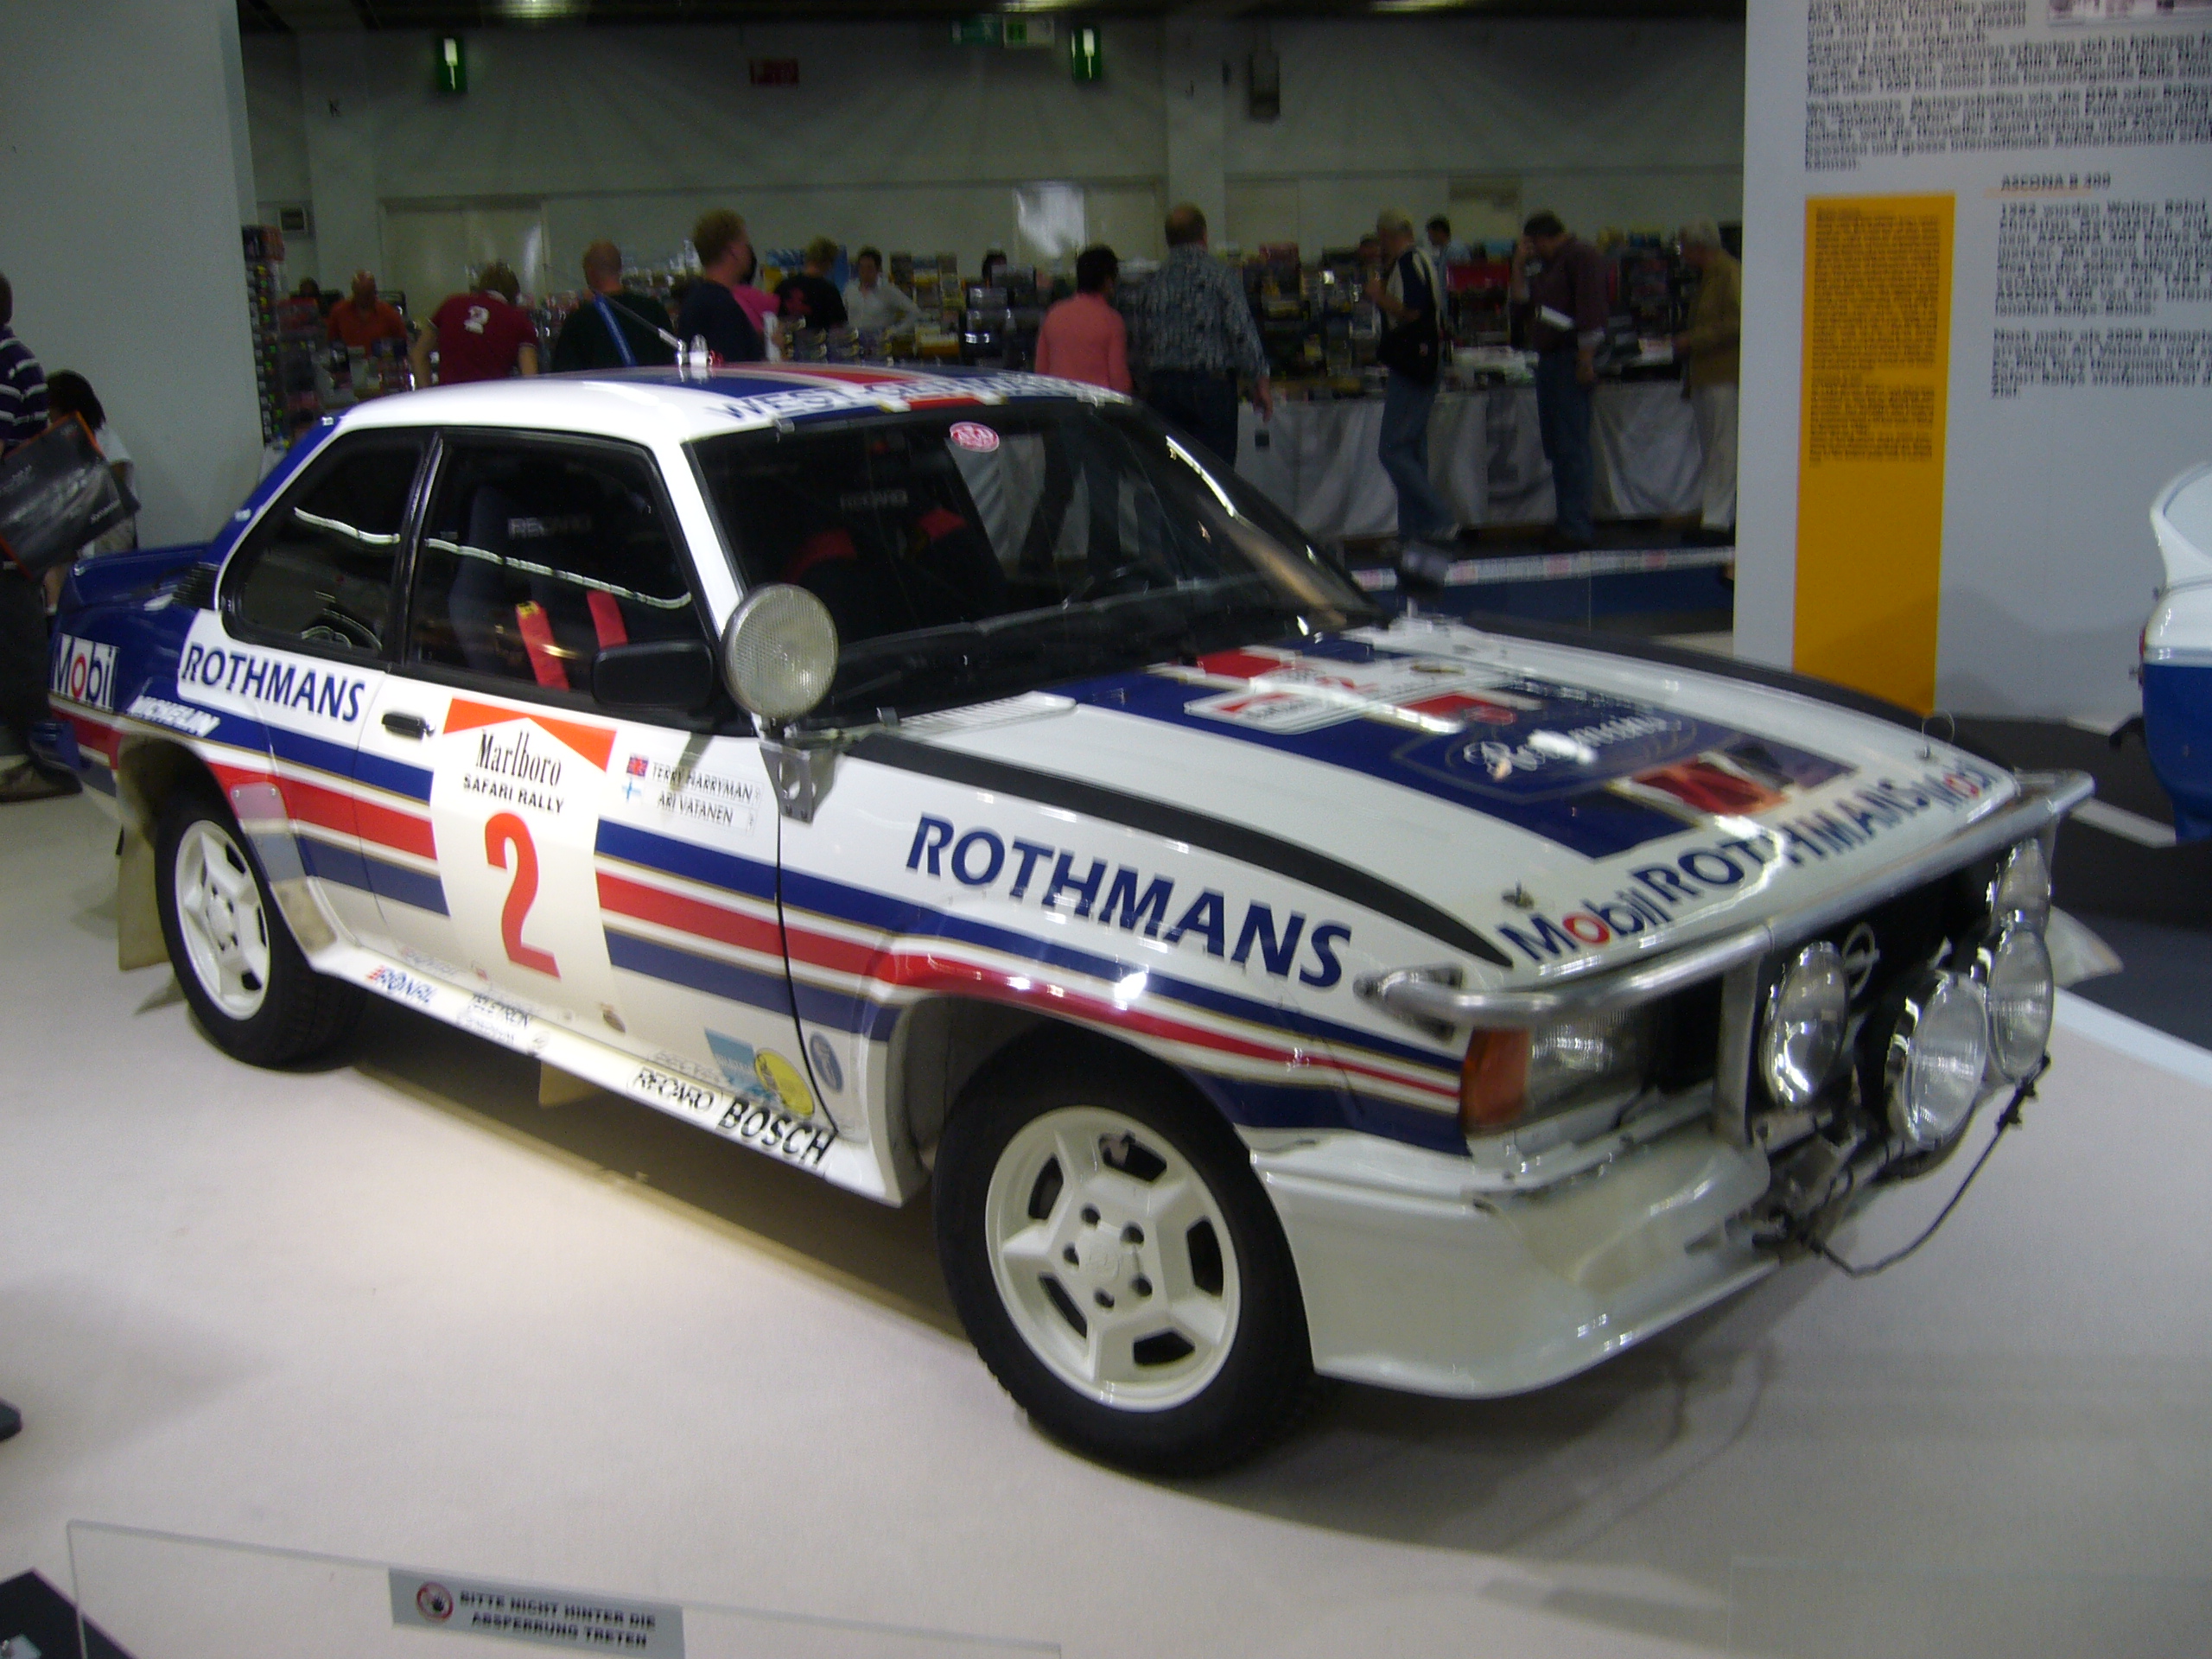 http://upload.wikimedia.org/wikipedia/commons/1/15/Opel_Ascona_Rallye_Rothmans.JPG